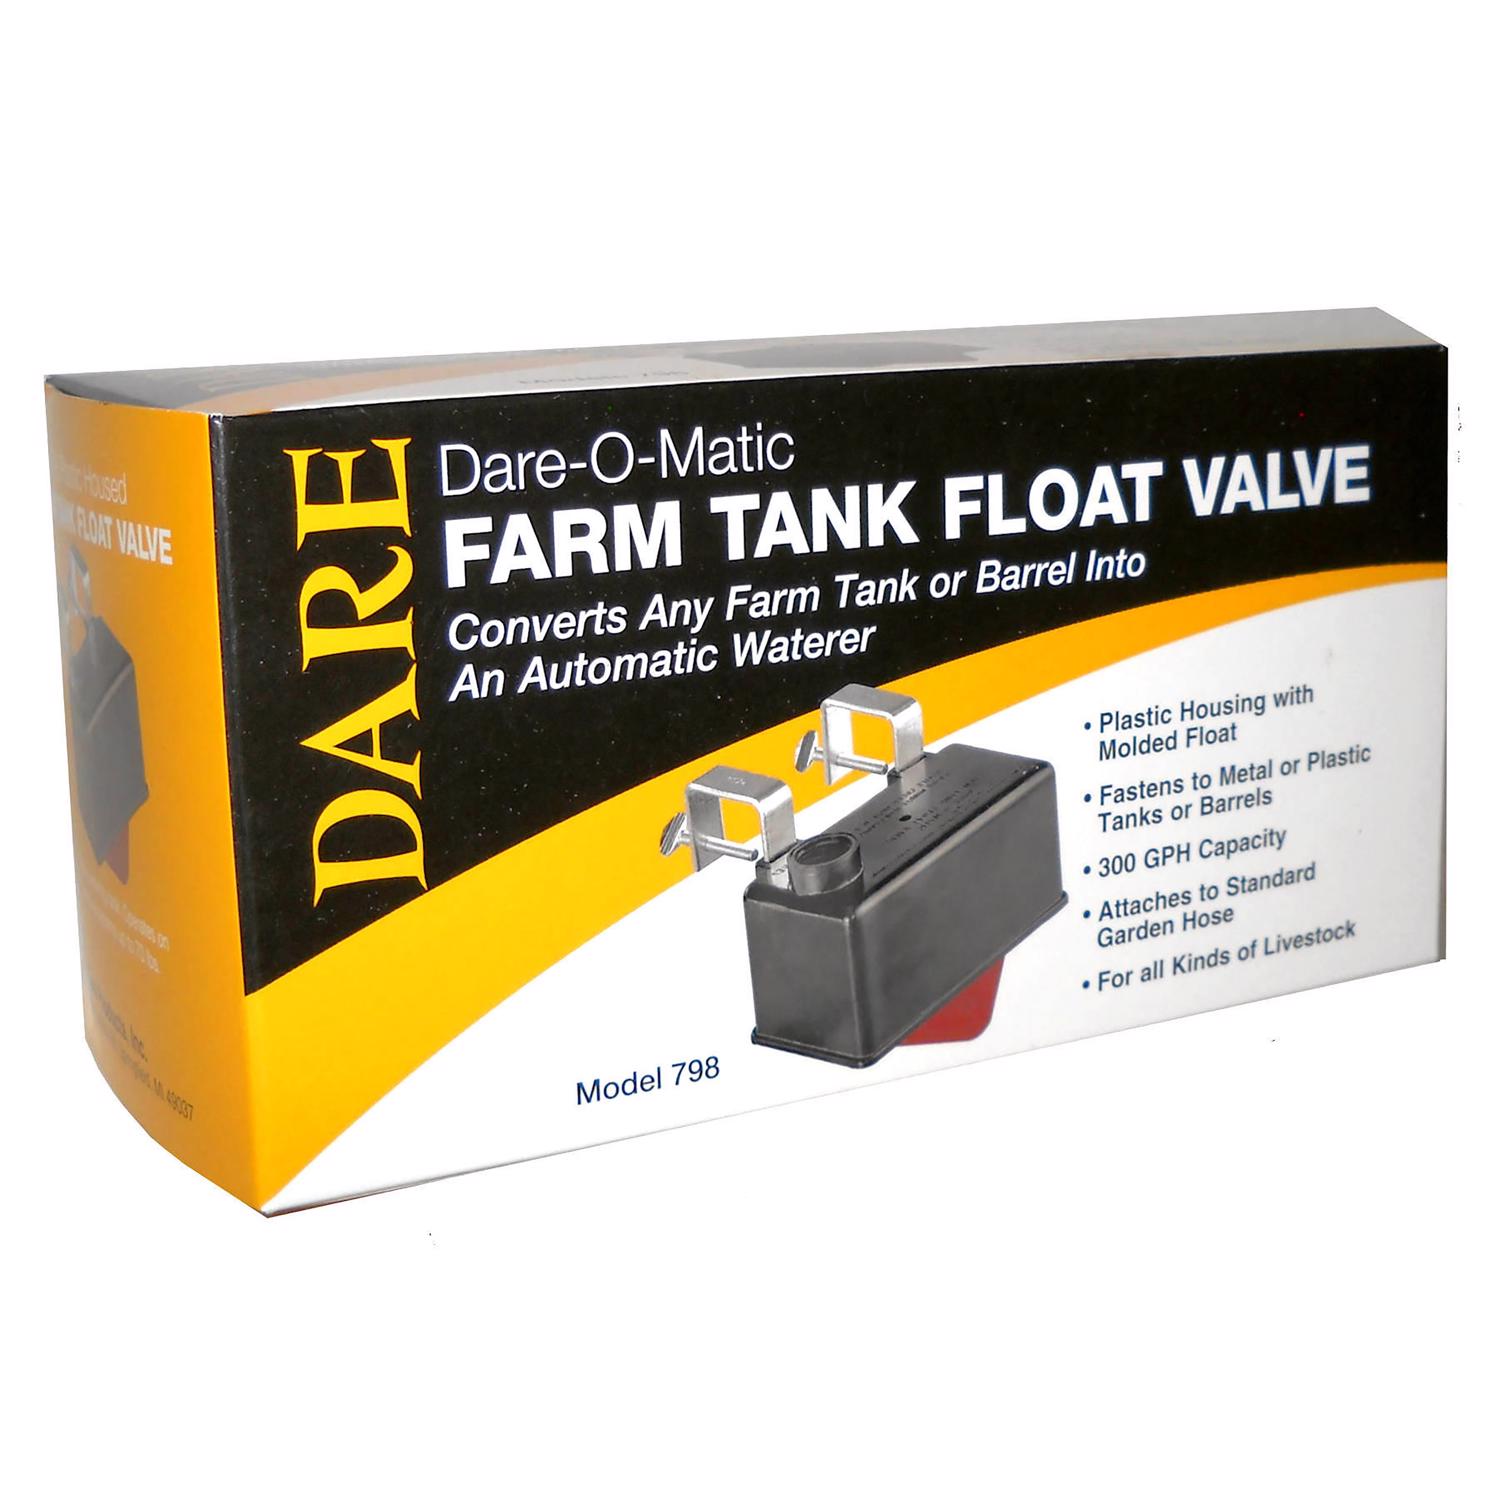 Dare-O-Matic 300 gph Plastic Farm Tank Float Valve